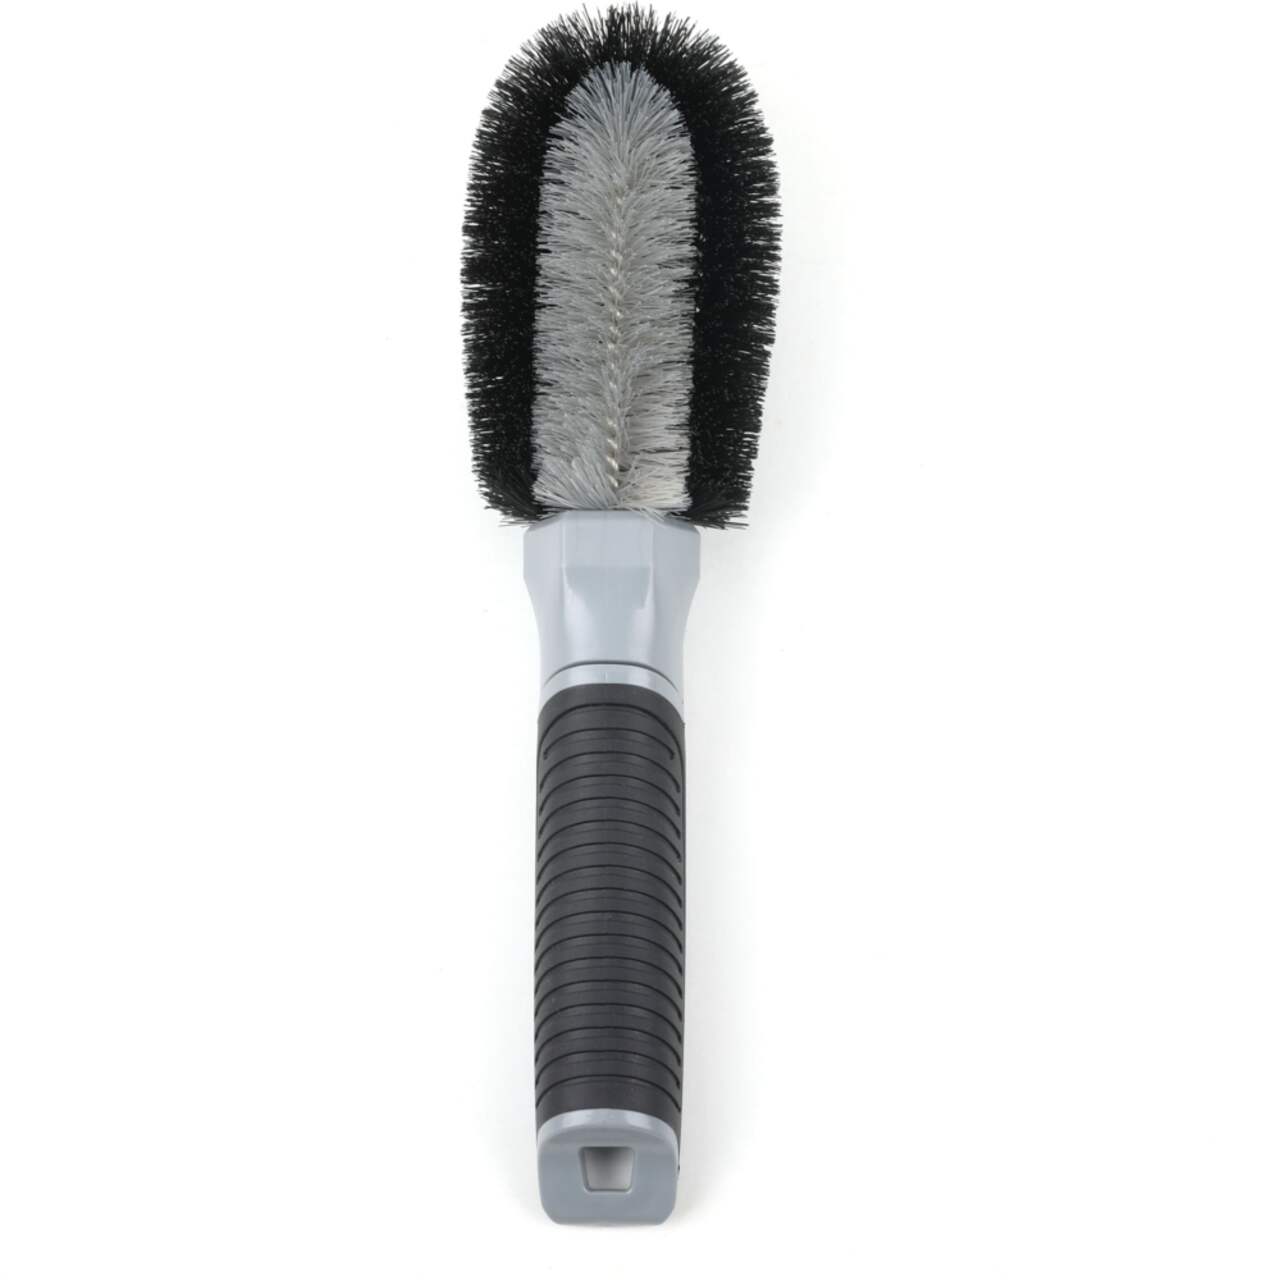 TVCMALL Car Wheel Cleaning Brush Soft Microfibre Long Handle Rim Detailing Brush - Black+White Handle